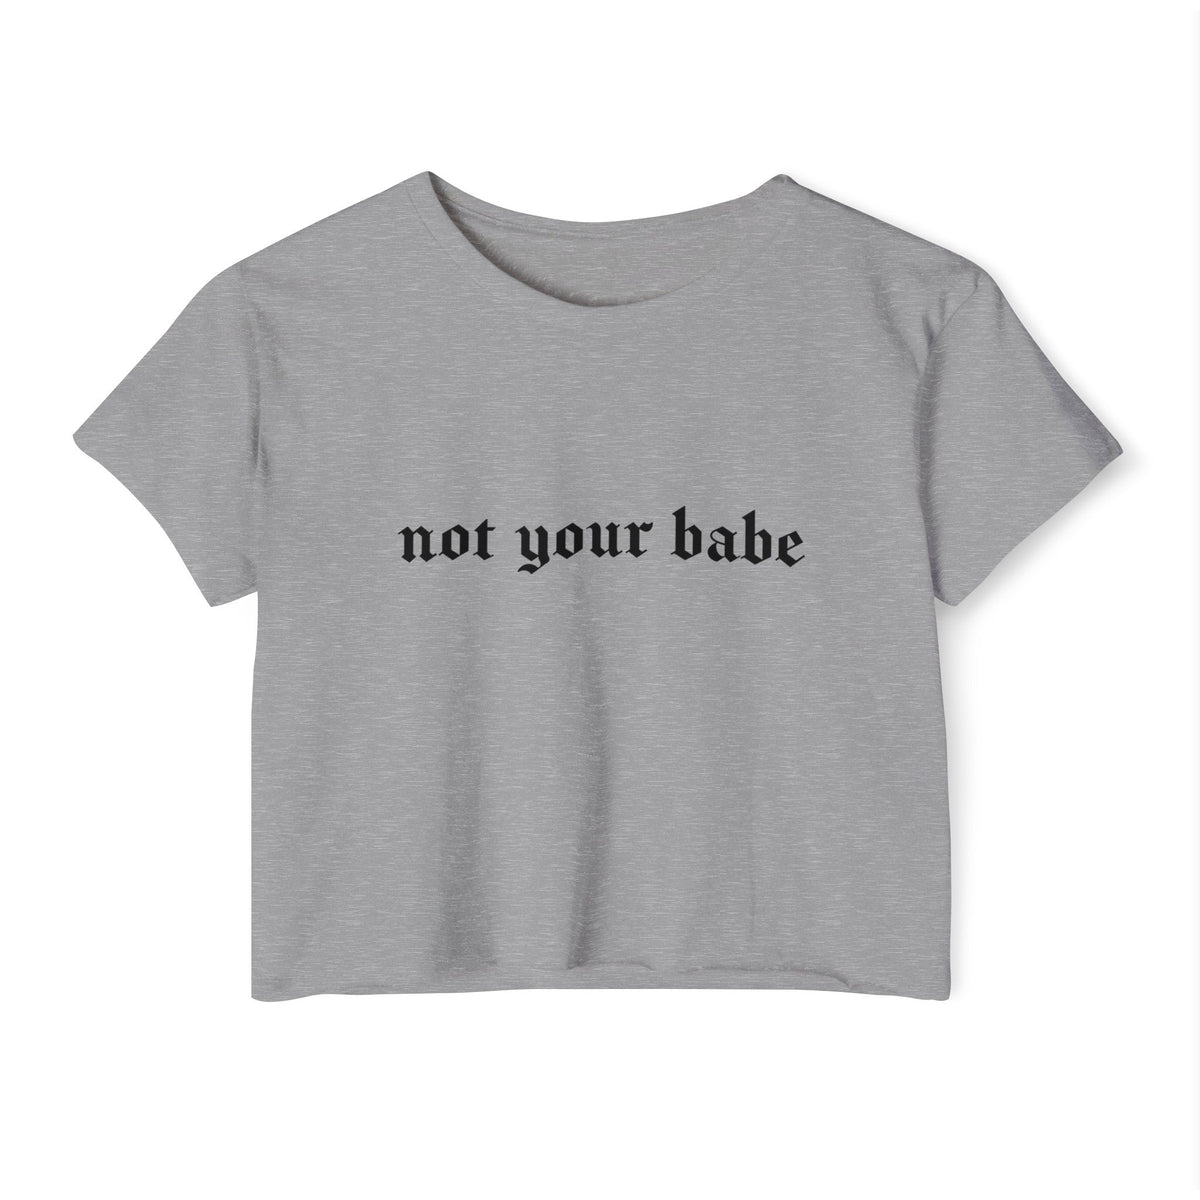 Not Your Babe Women's Lightweight Crop Top - Goth Cloth Co.T - Shirt14093888716157369668